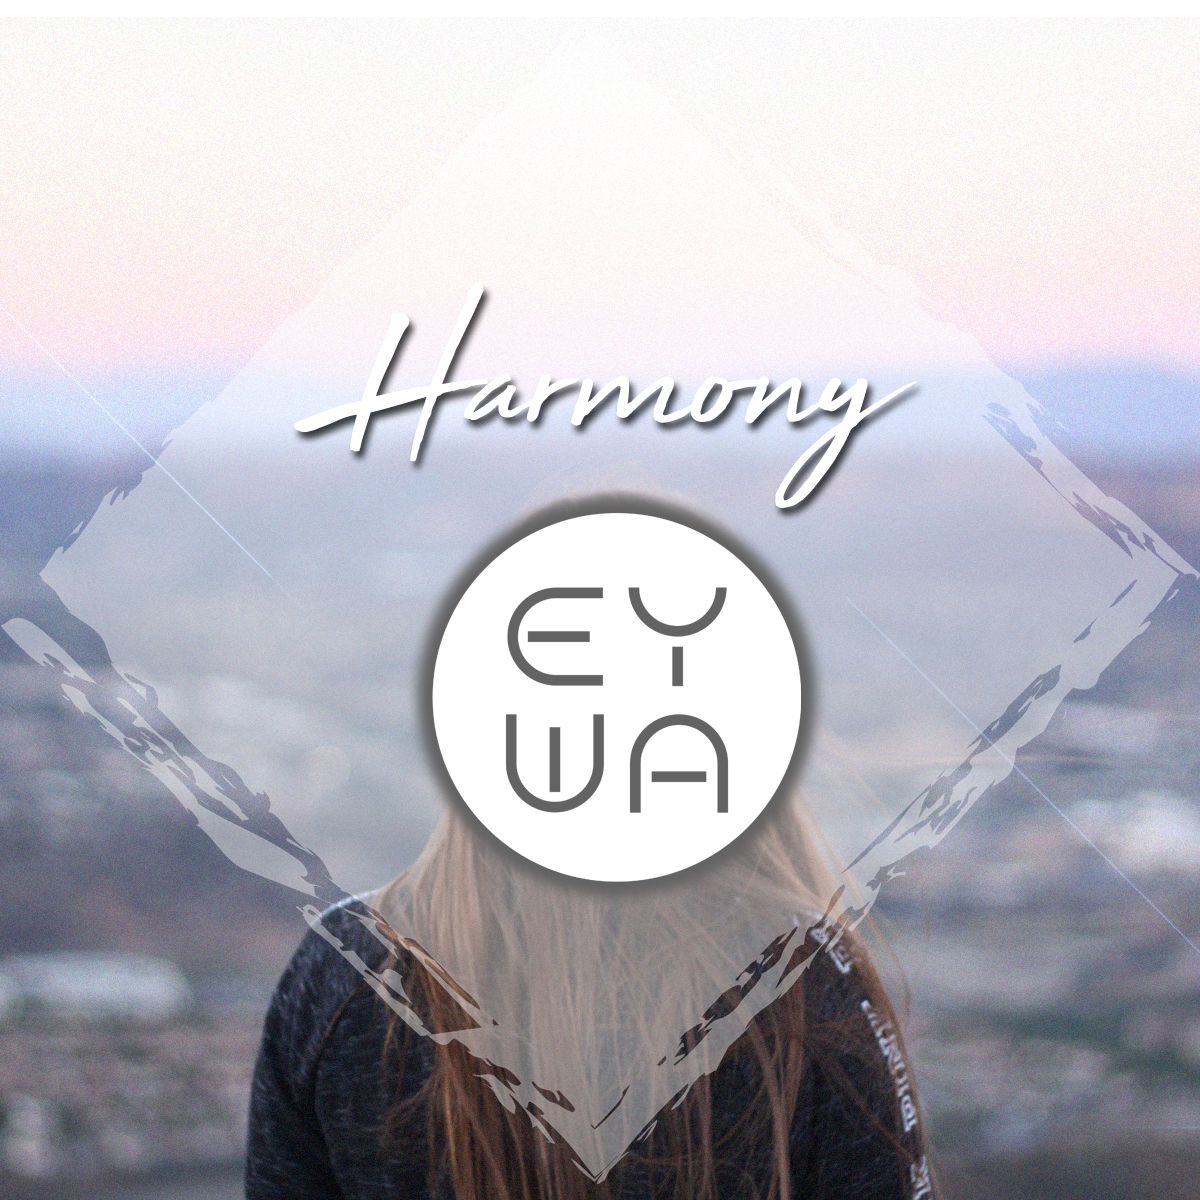 Descărcați! Eywa - Harmony // Downloadlink in description